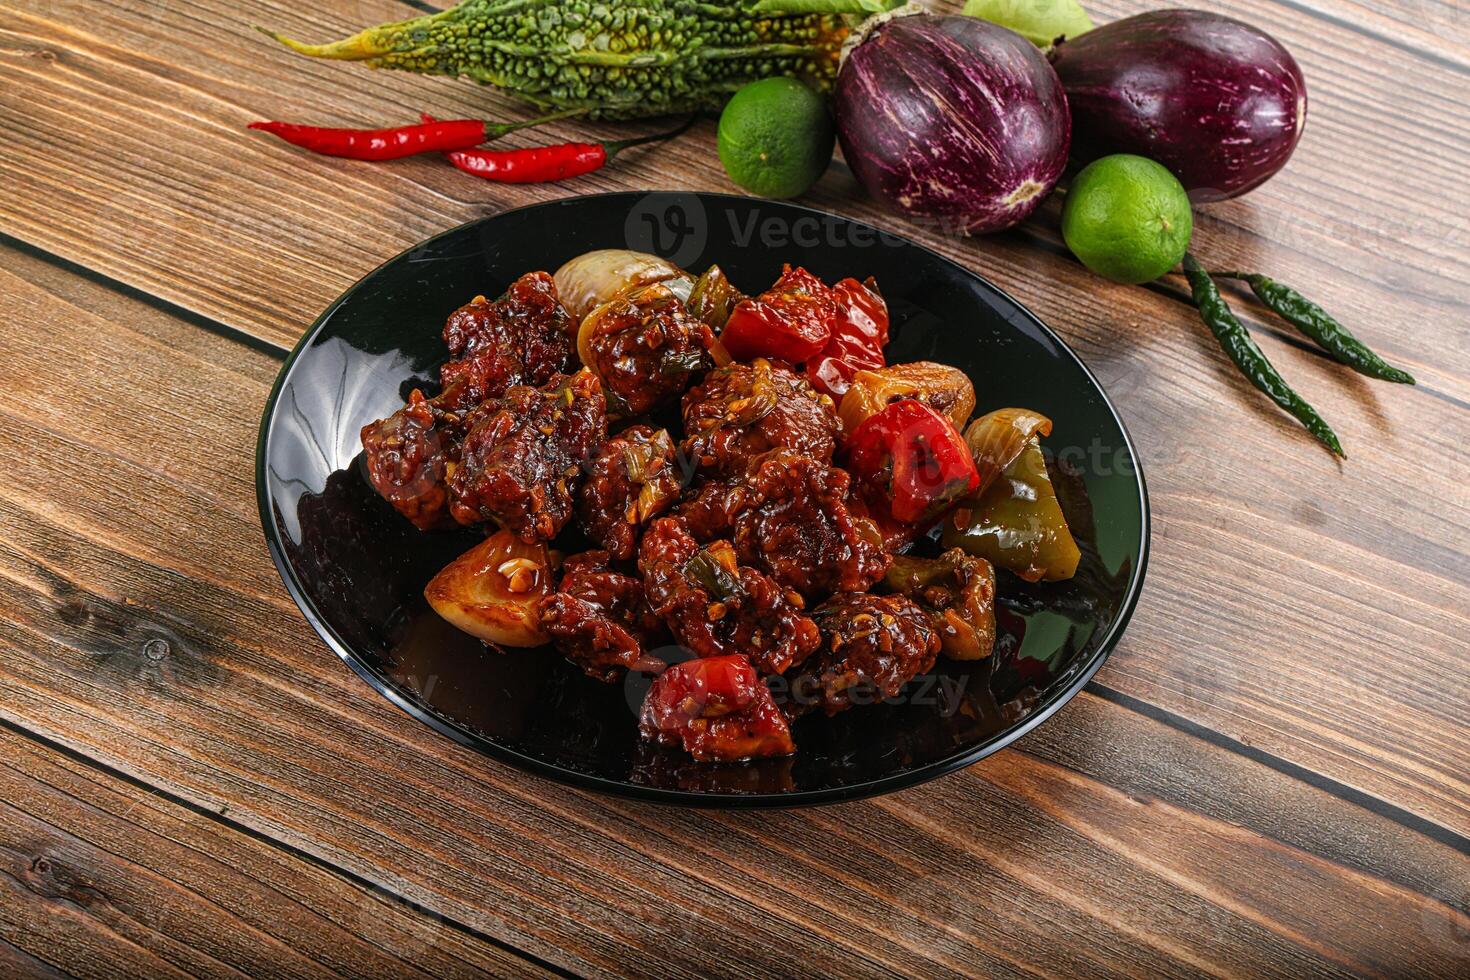 Asian cuisine - pork with chili sauce photo